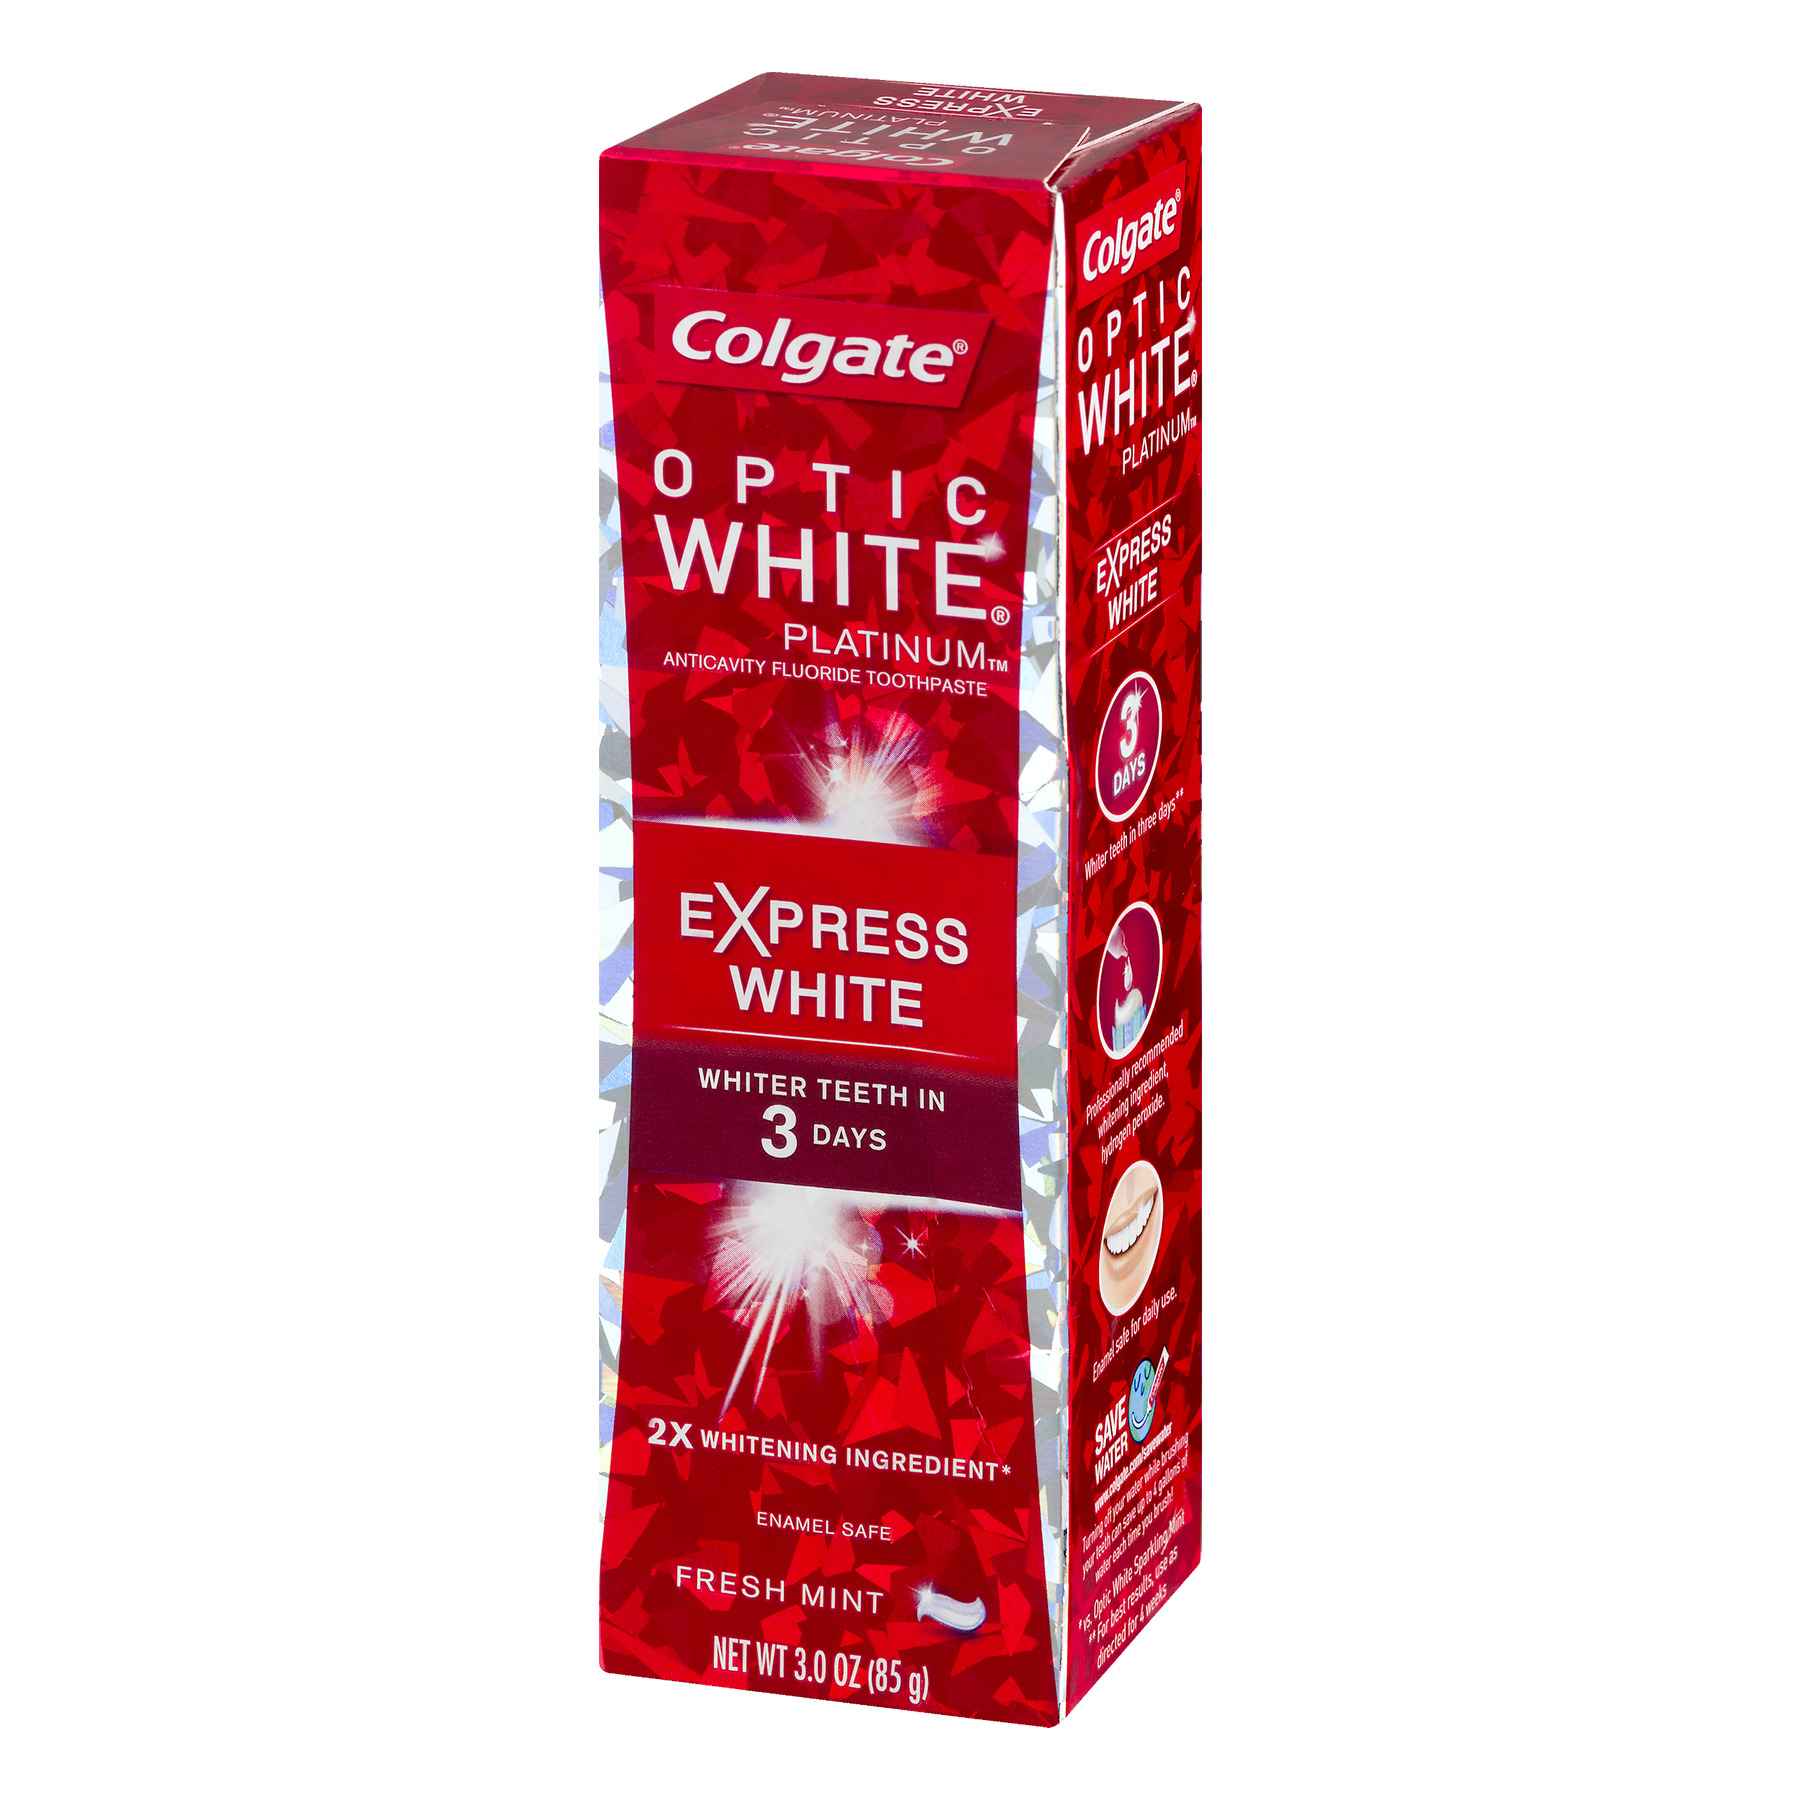 Colgate Optic White Express White Whitening Toothpaste - 3 ounce - image 3 of 8